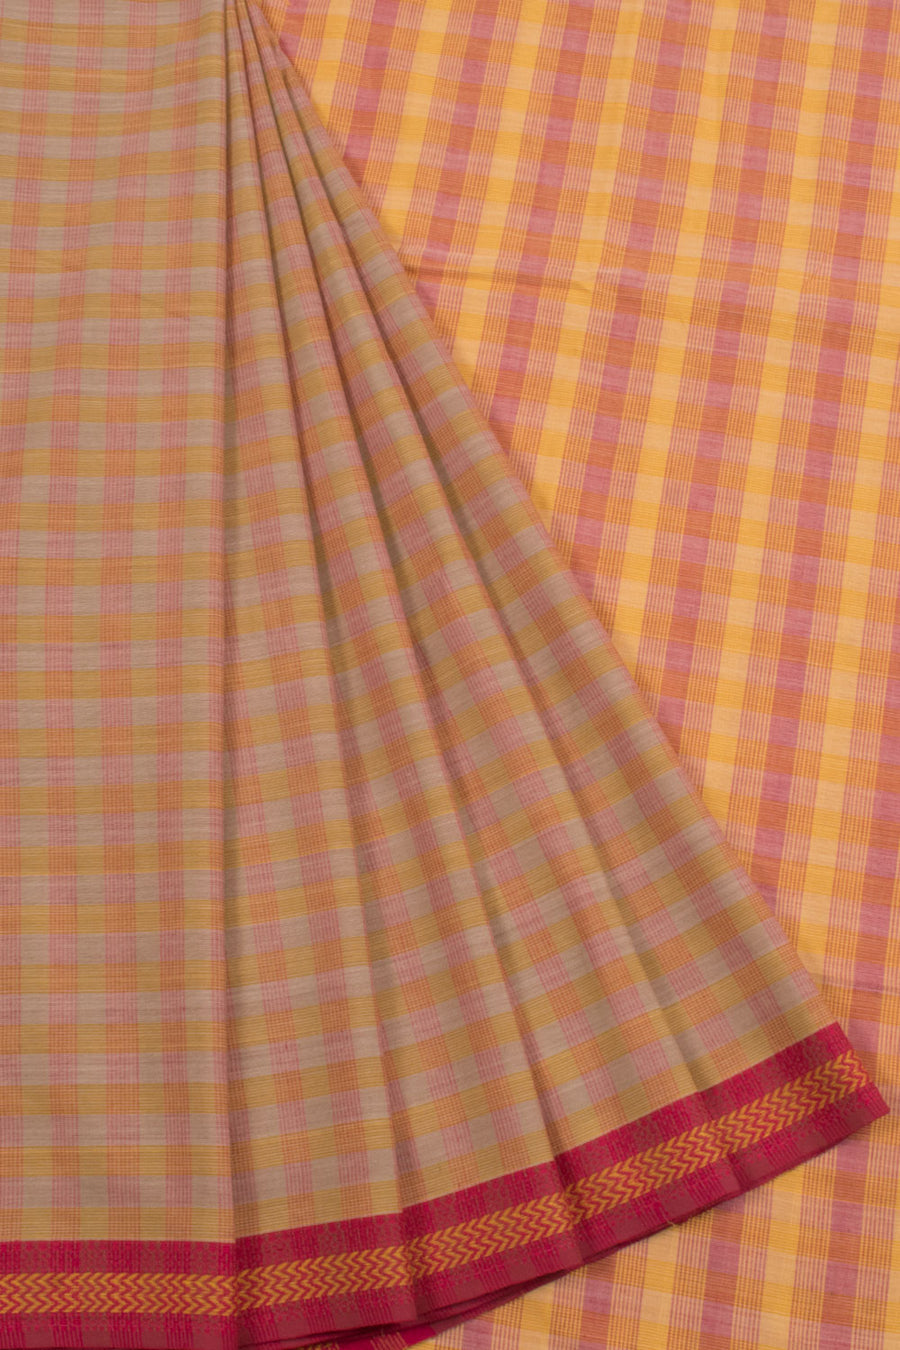 Handloom Cotton Saree with Checks Design and Zigzag Border